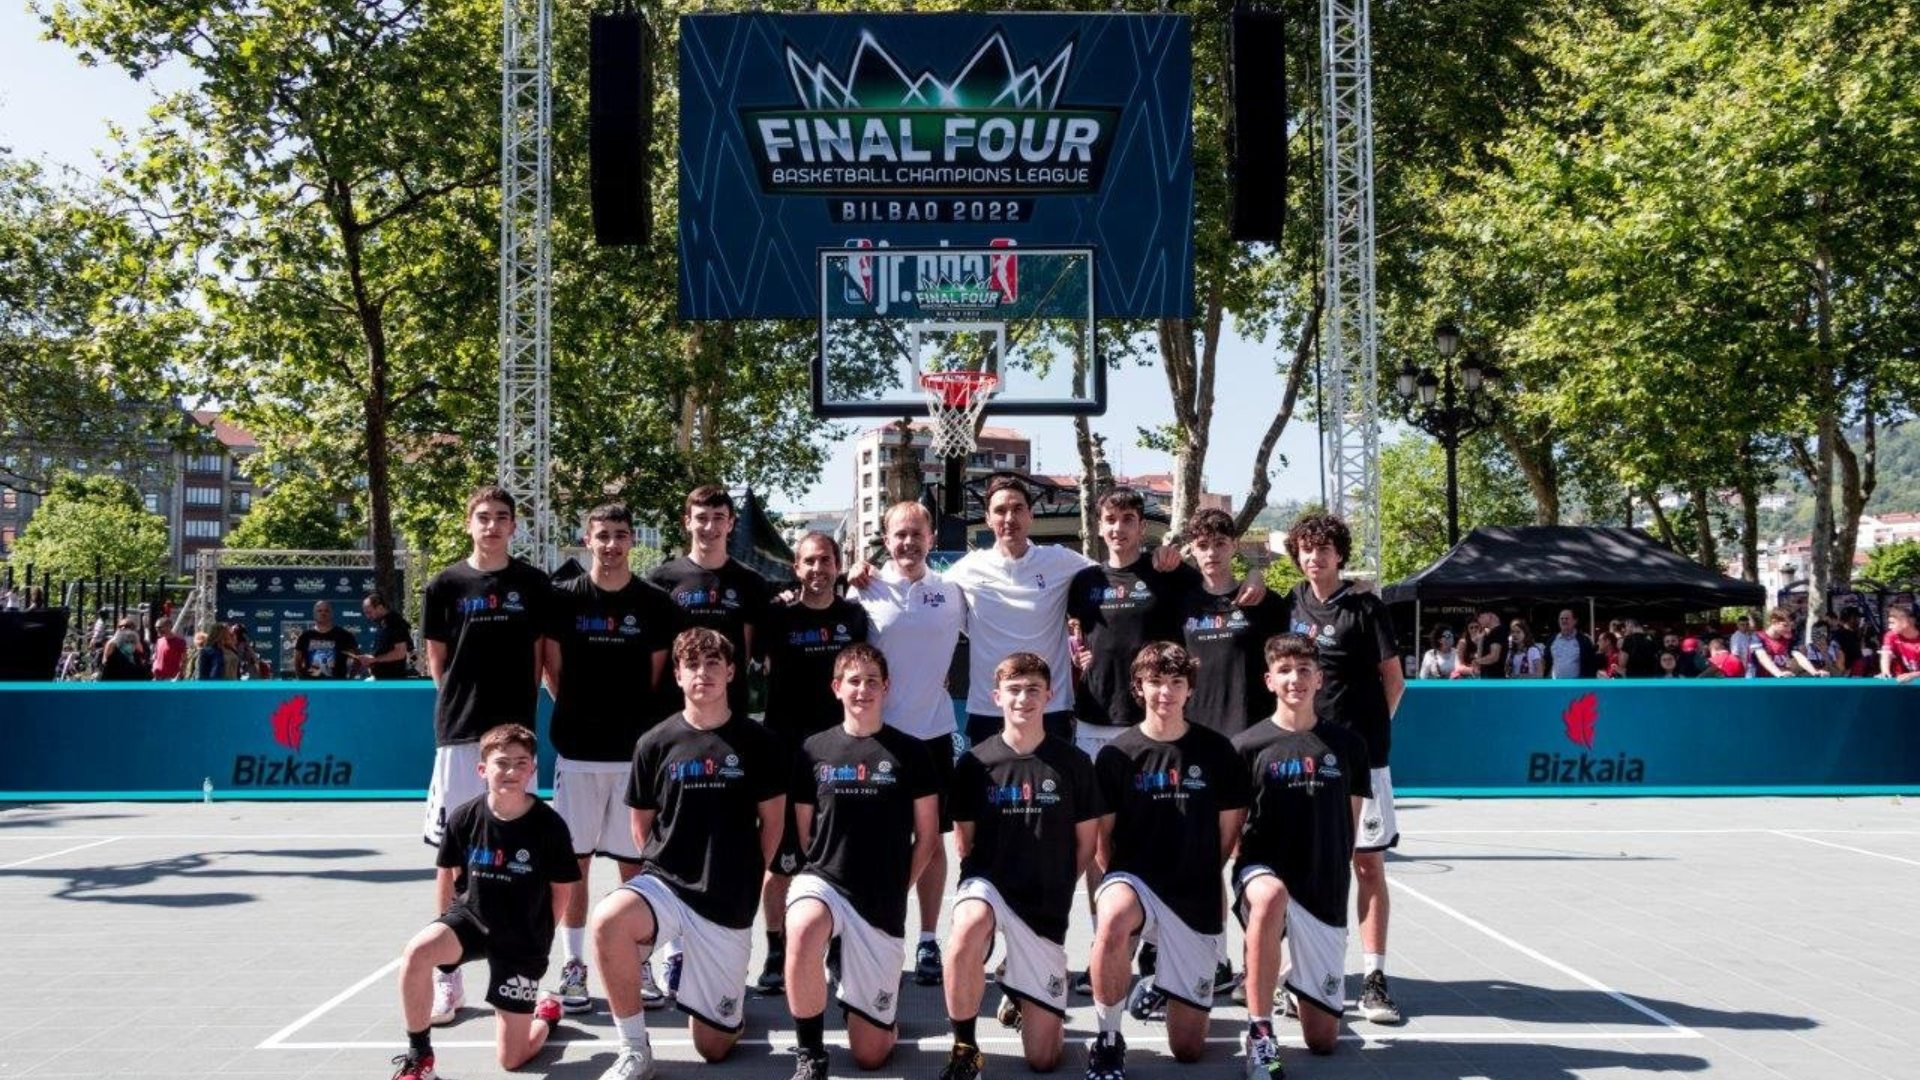 2022 Final-Four FIBA Champions League